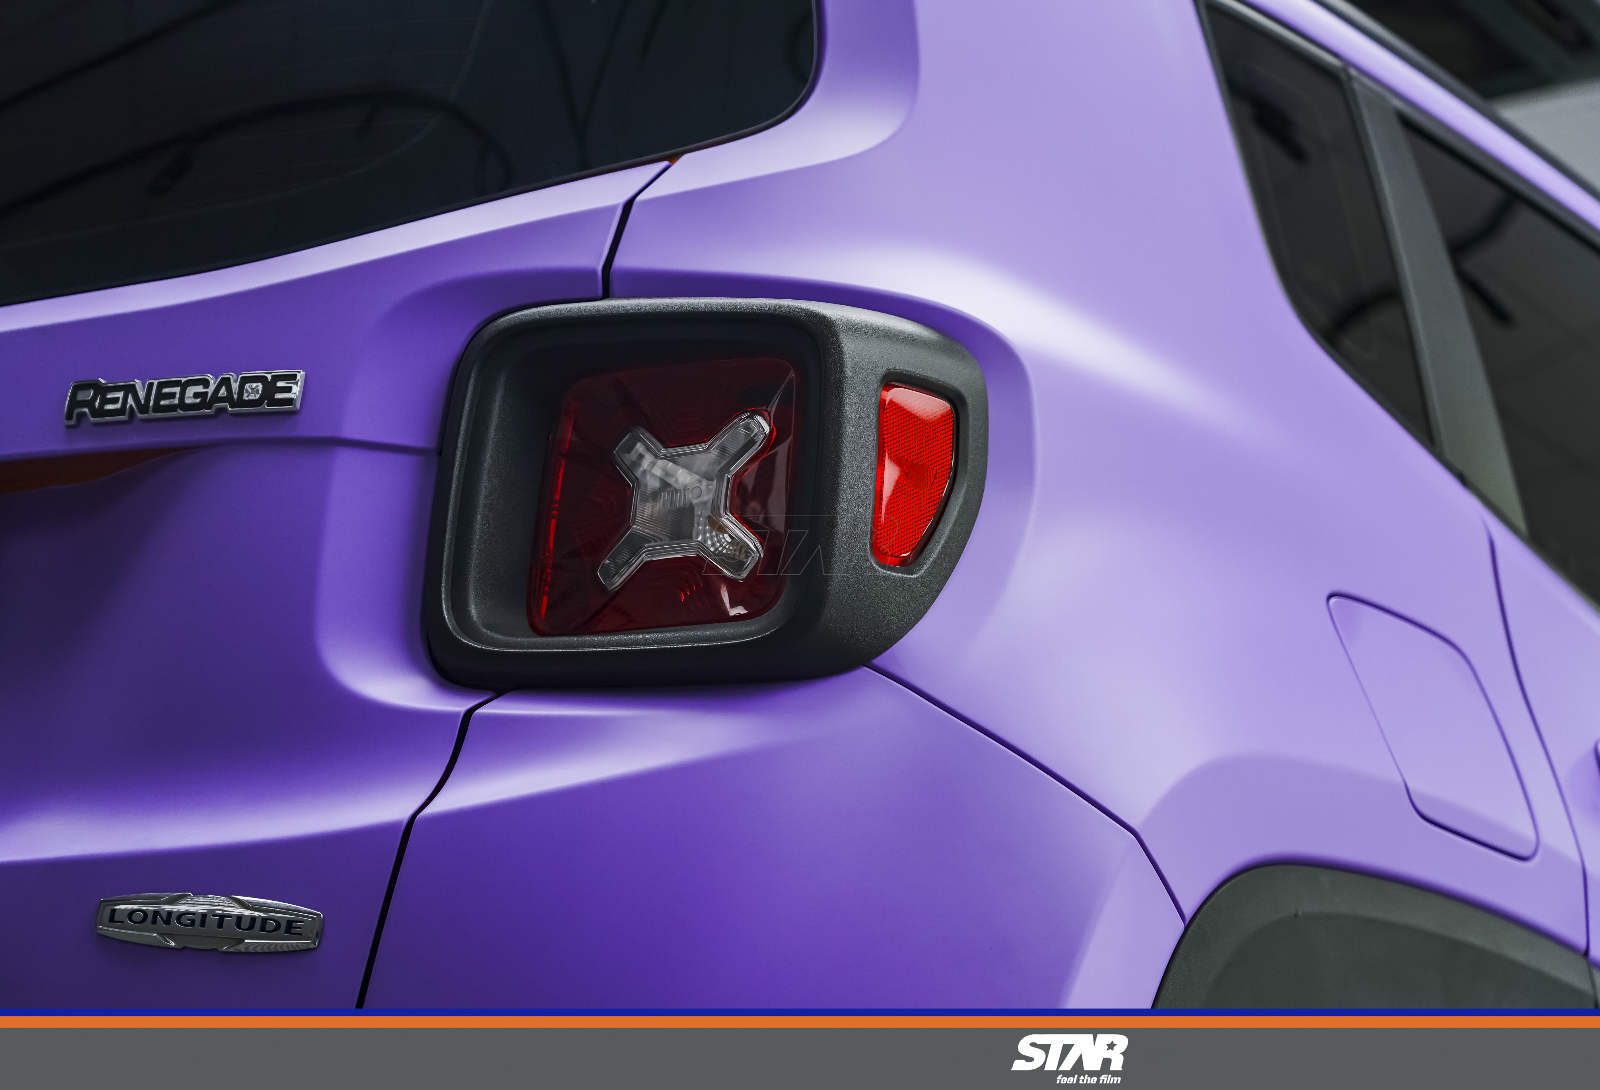 jeep自由侠改色膜消光薰衣草紫,女神节送这个颜色很到位